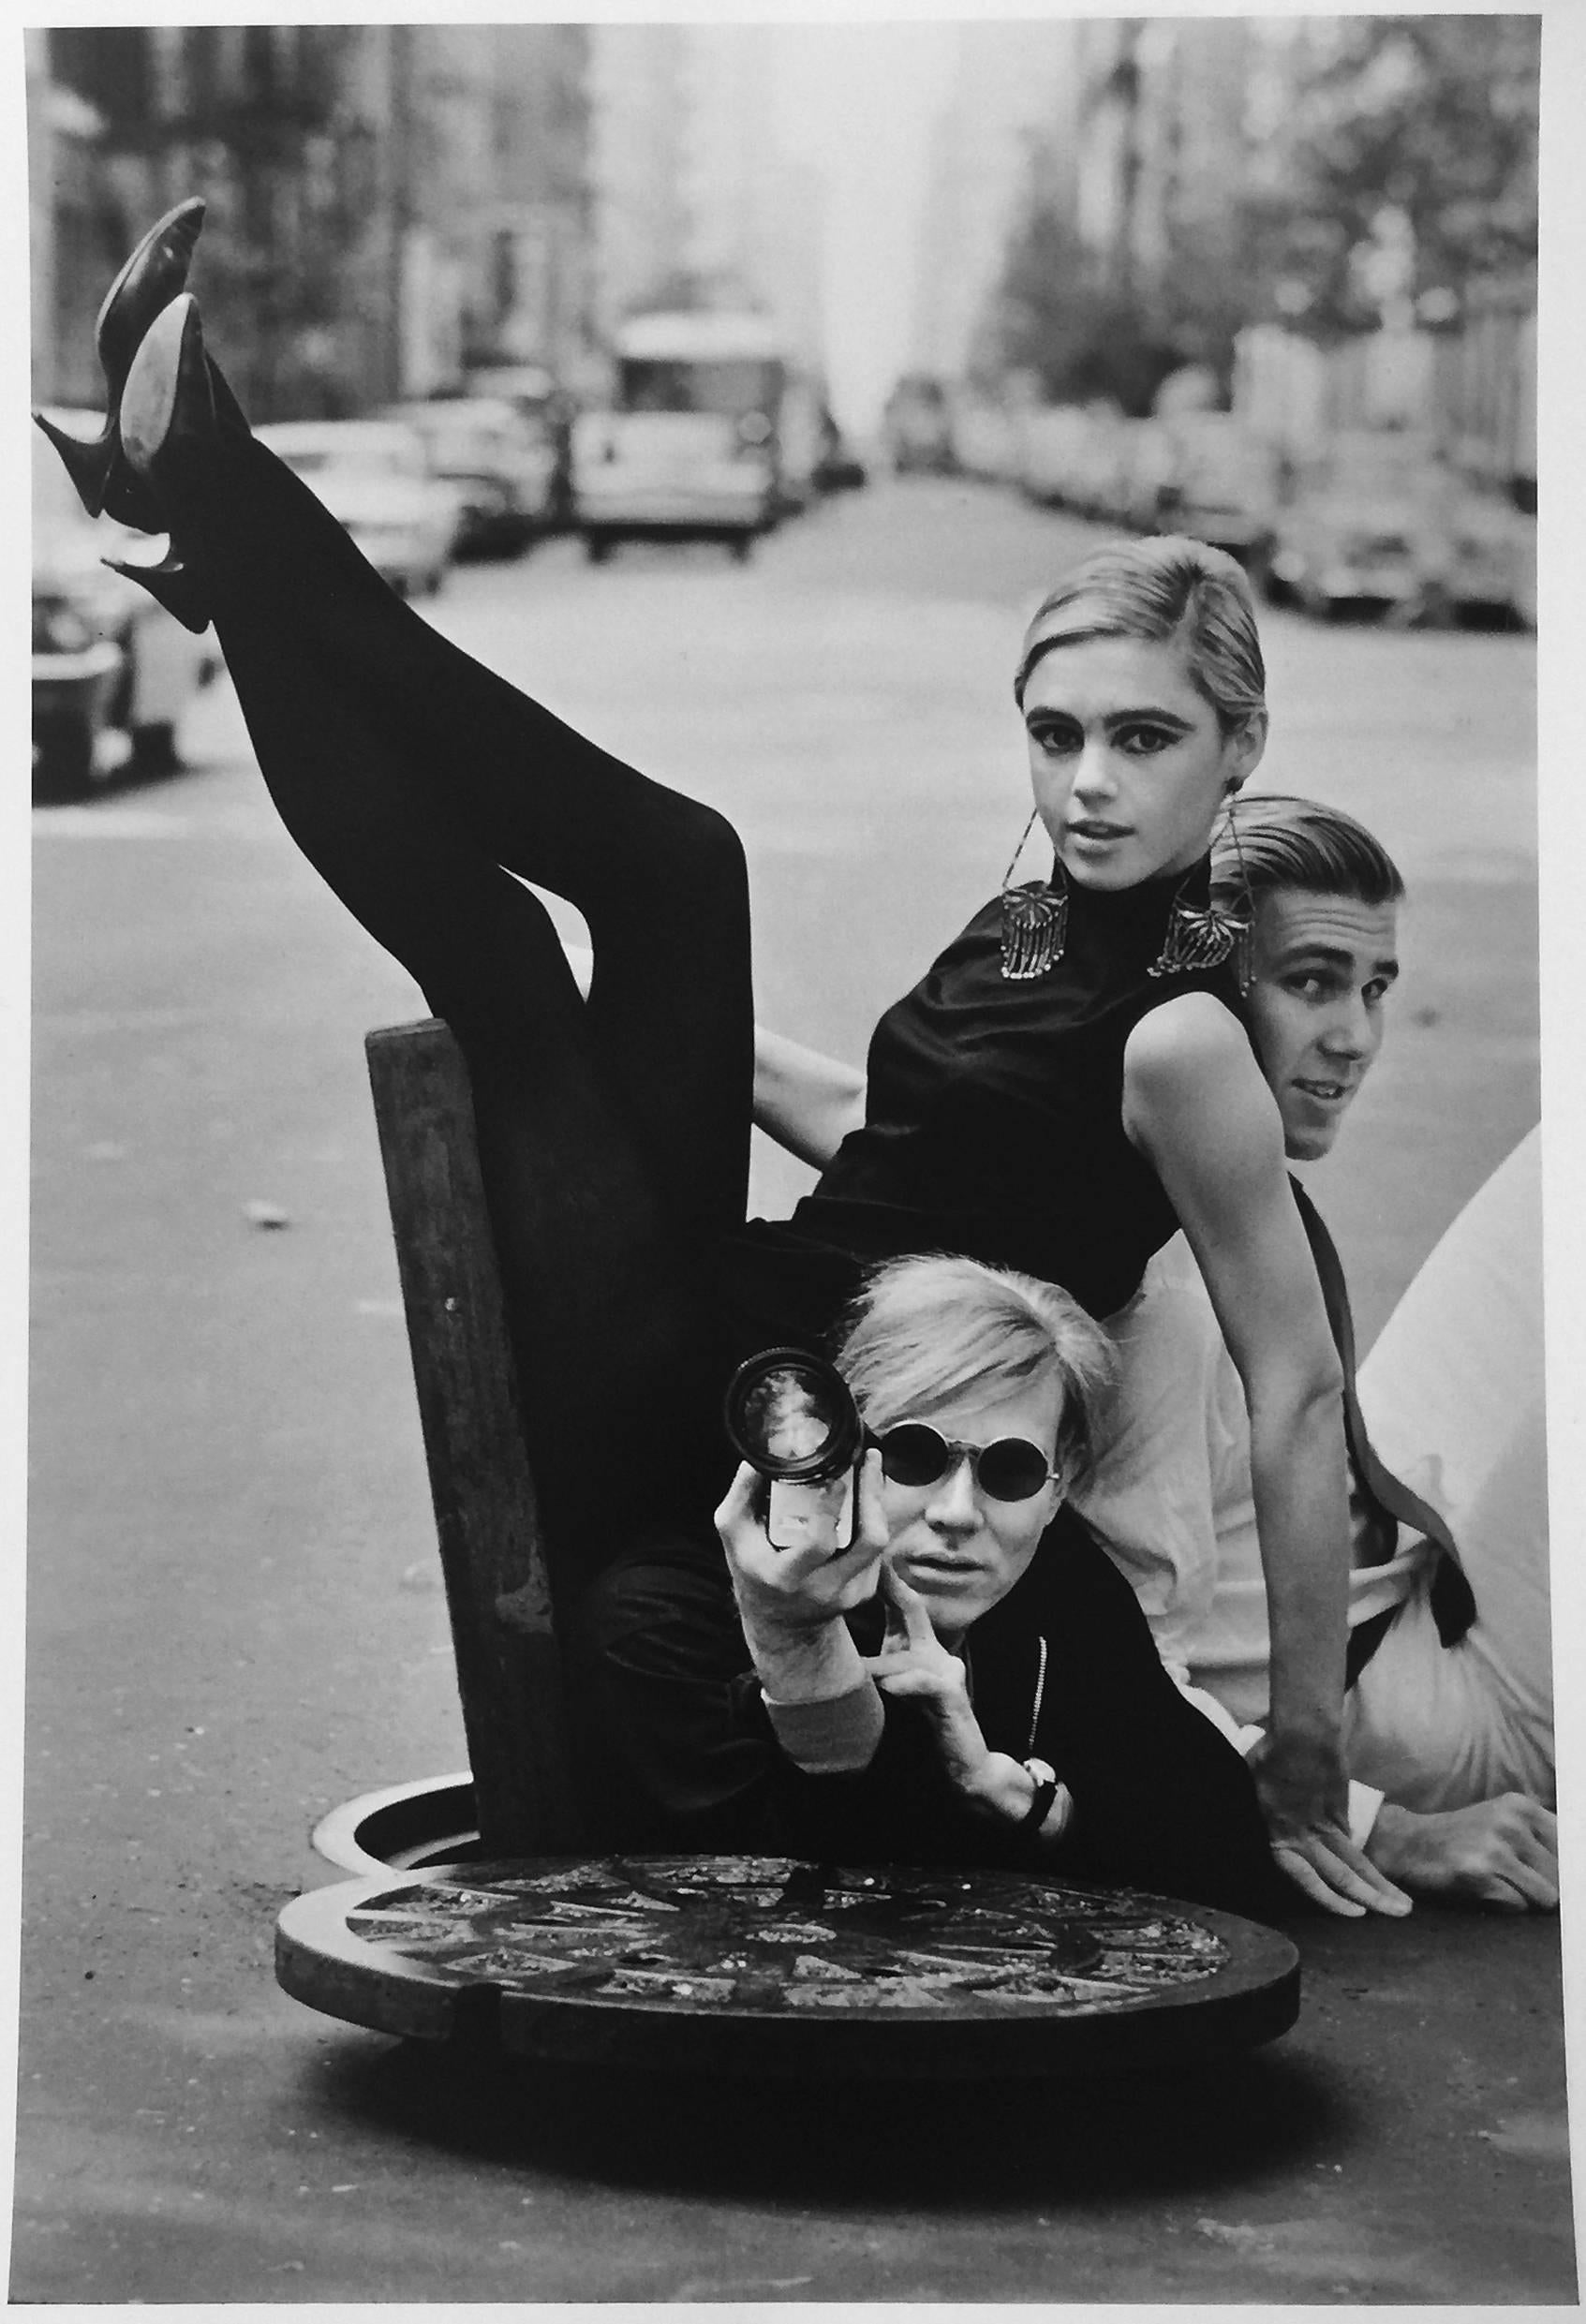 Burt Glinn Portrait Photograph - Andy Warhol, Edie Sedgwick, Chuck Wein, Photograph of 1960s Pop Art Stars